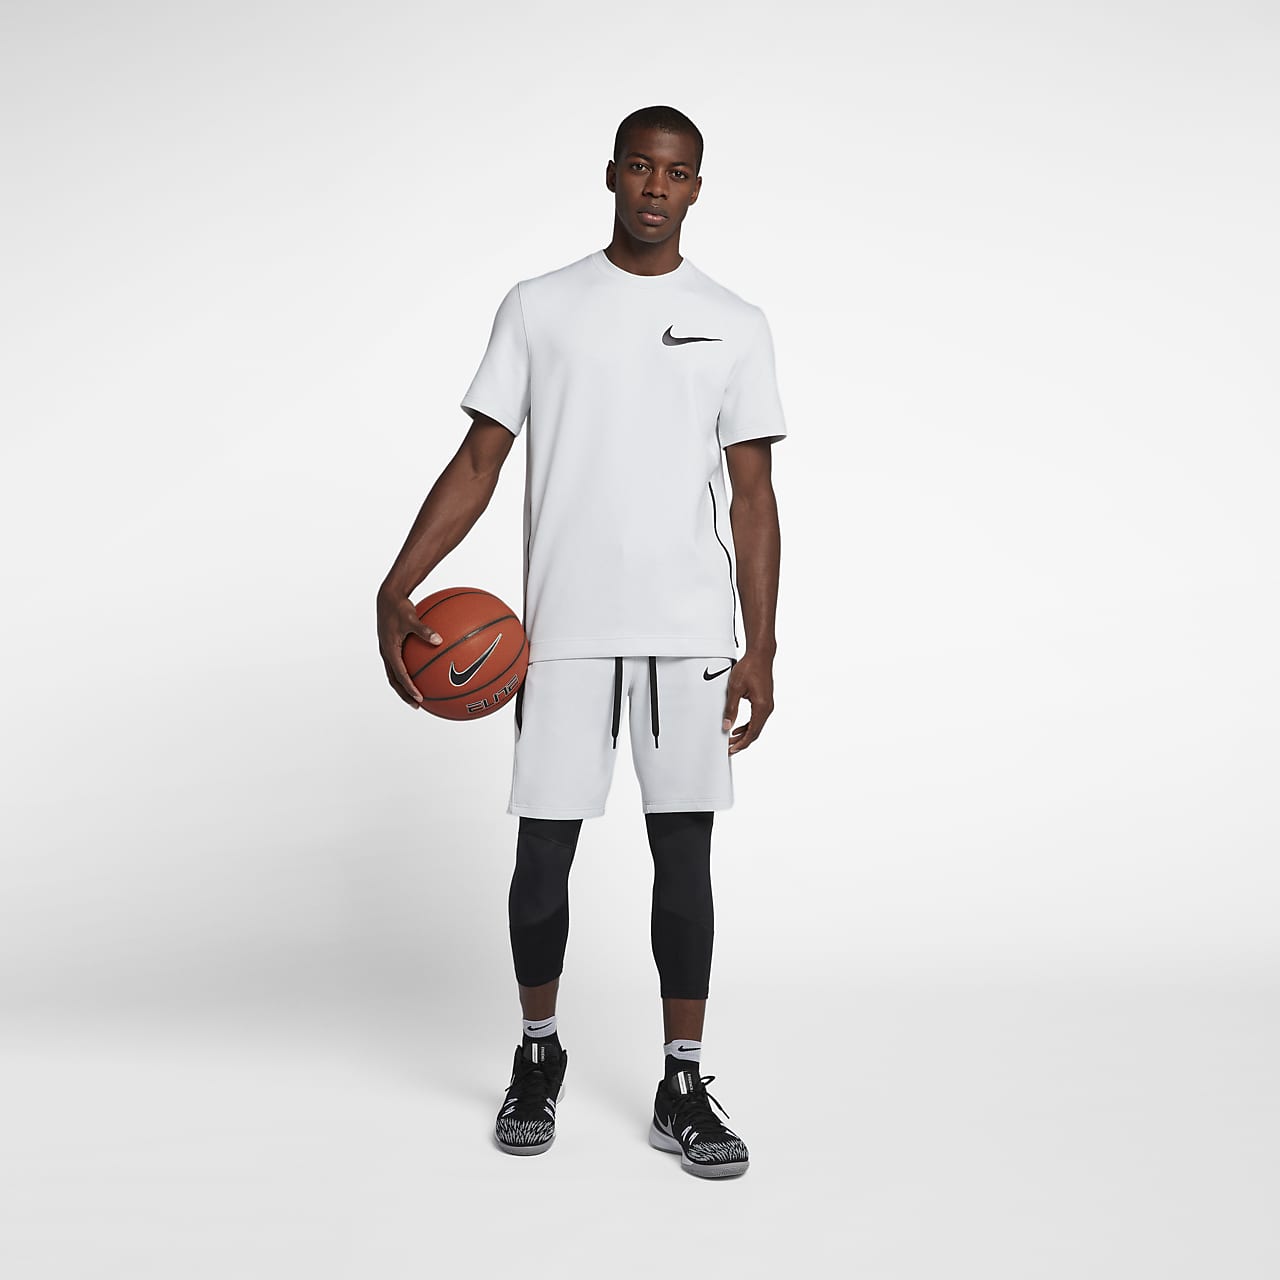 Collant Nike Pro Dri-fit black/white - Basket4Ballers